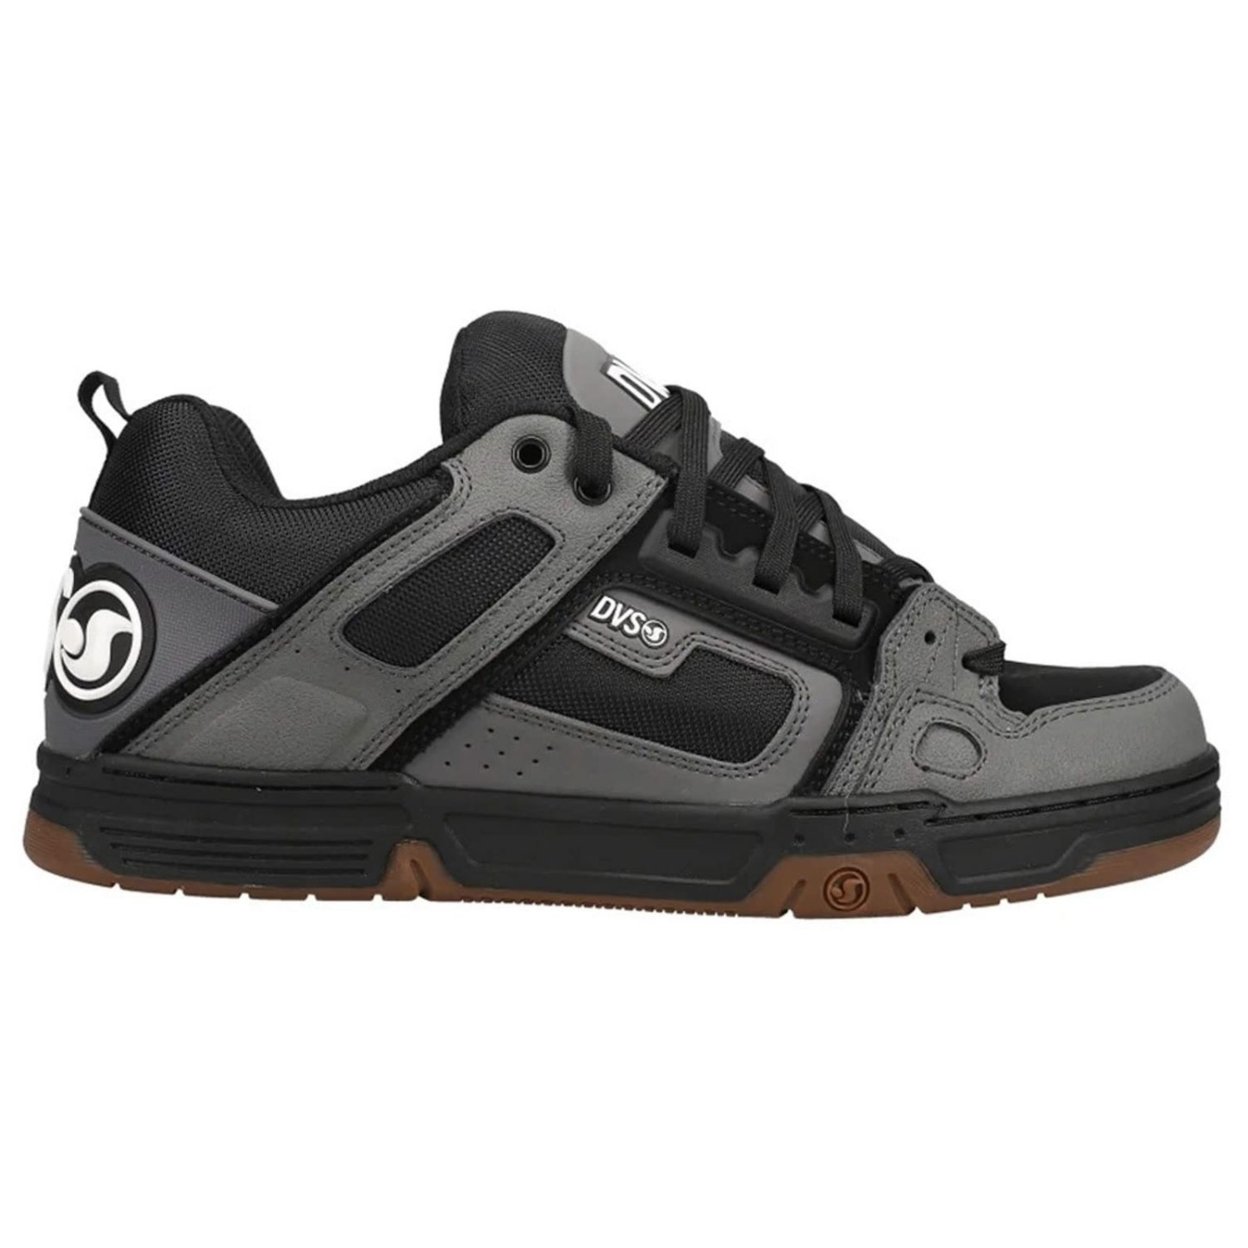 DVS Skateboard Shoes Comanche Charcoal/Black/Gum/White Mens 0 CHARCOAL BLACK WHITE NUBUCK - CHARCOAL BLACK WHITE NUBUCK, 9